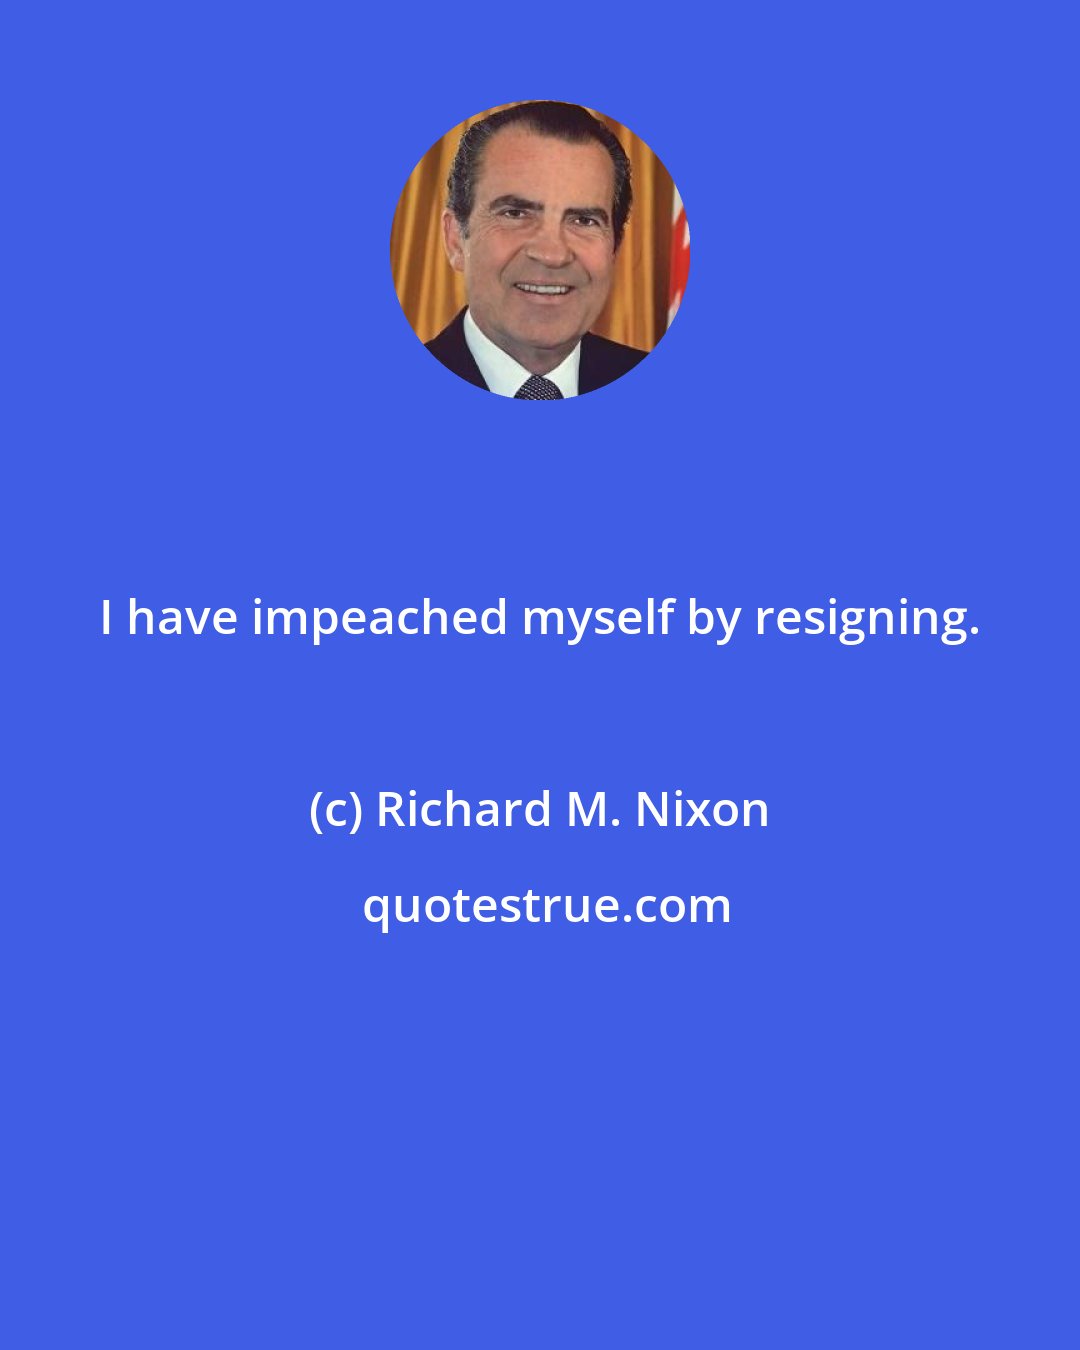 Richard M. Nixon: I have impeached myself by resigning.